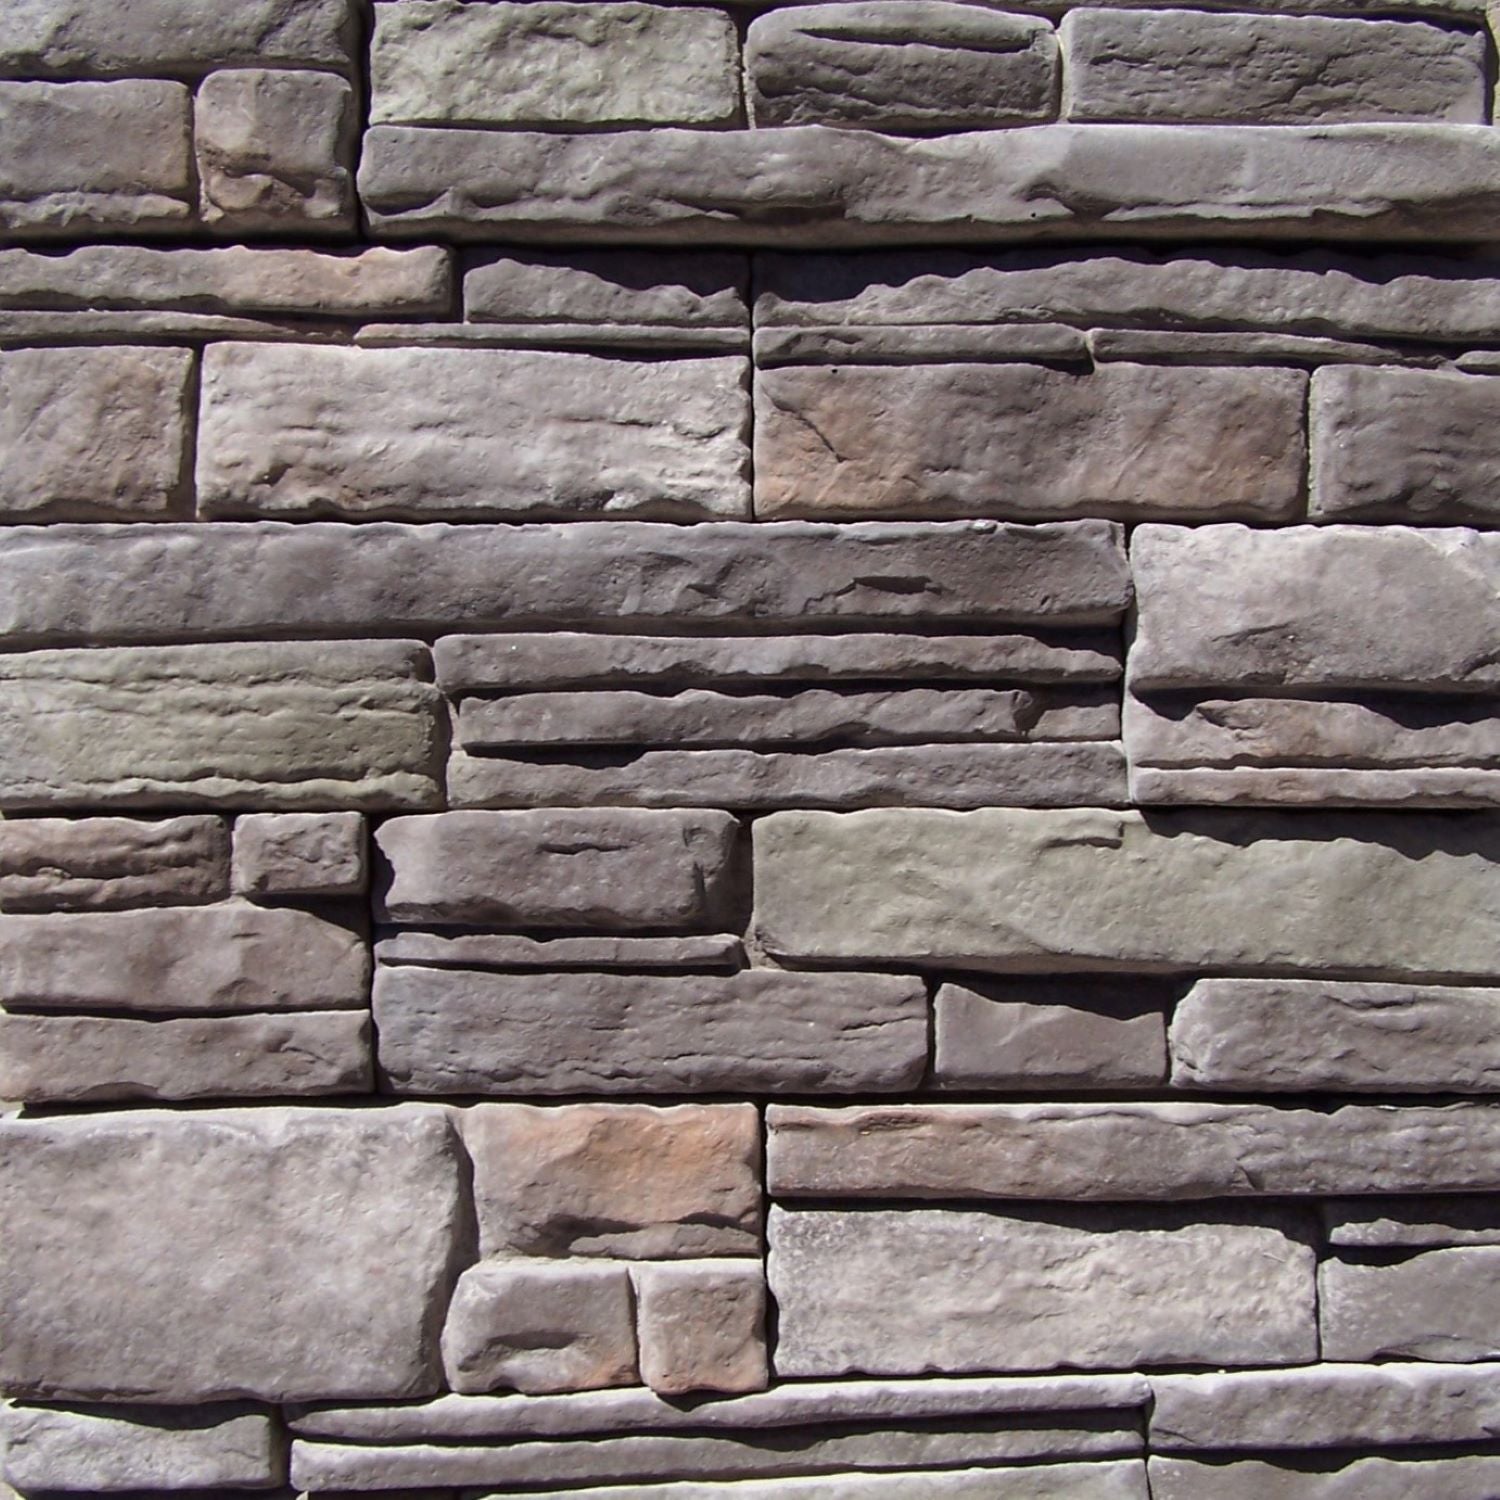 Stone Veneer - Ready Stack Mossy Creek - Mountain View Stone - Sample